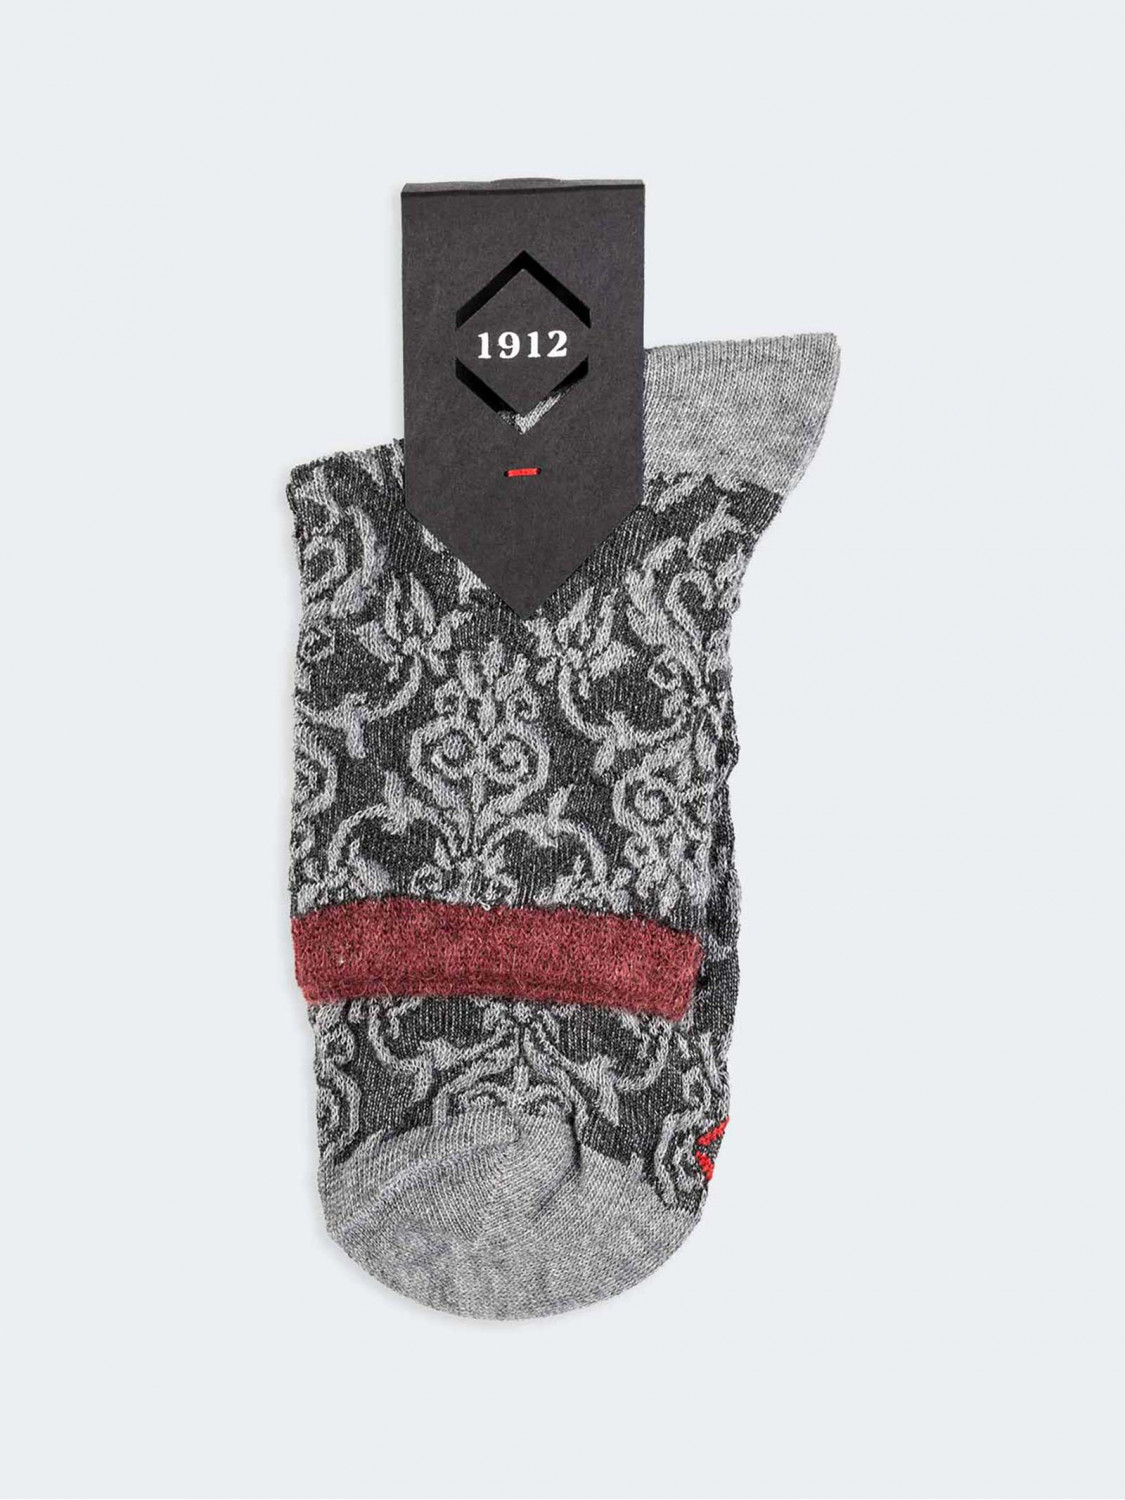 Damasked pattern Woman's socks